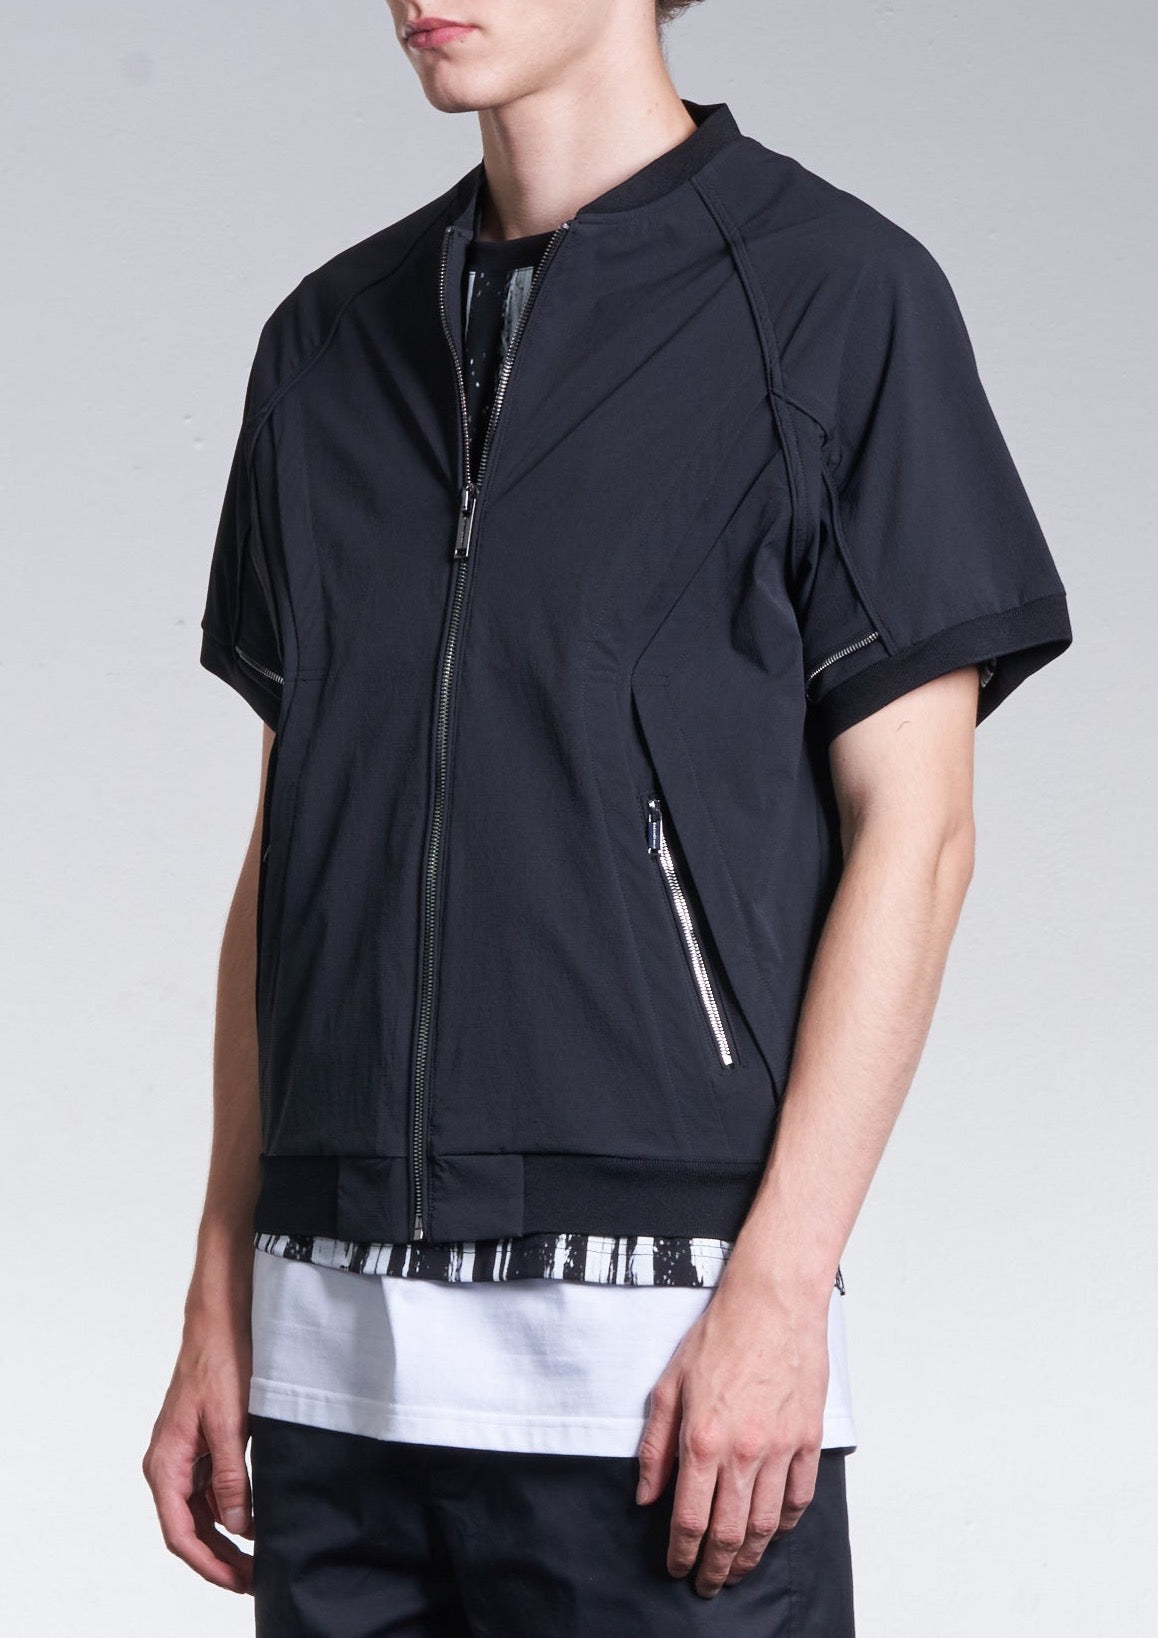 Zipper Nylon Jacket With Detachable Sleeve